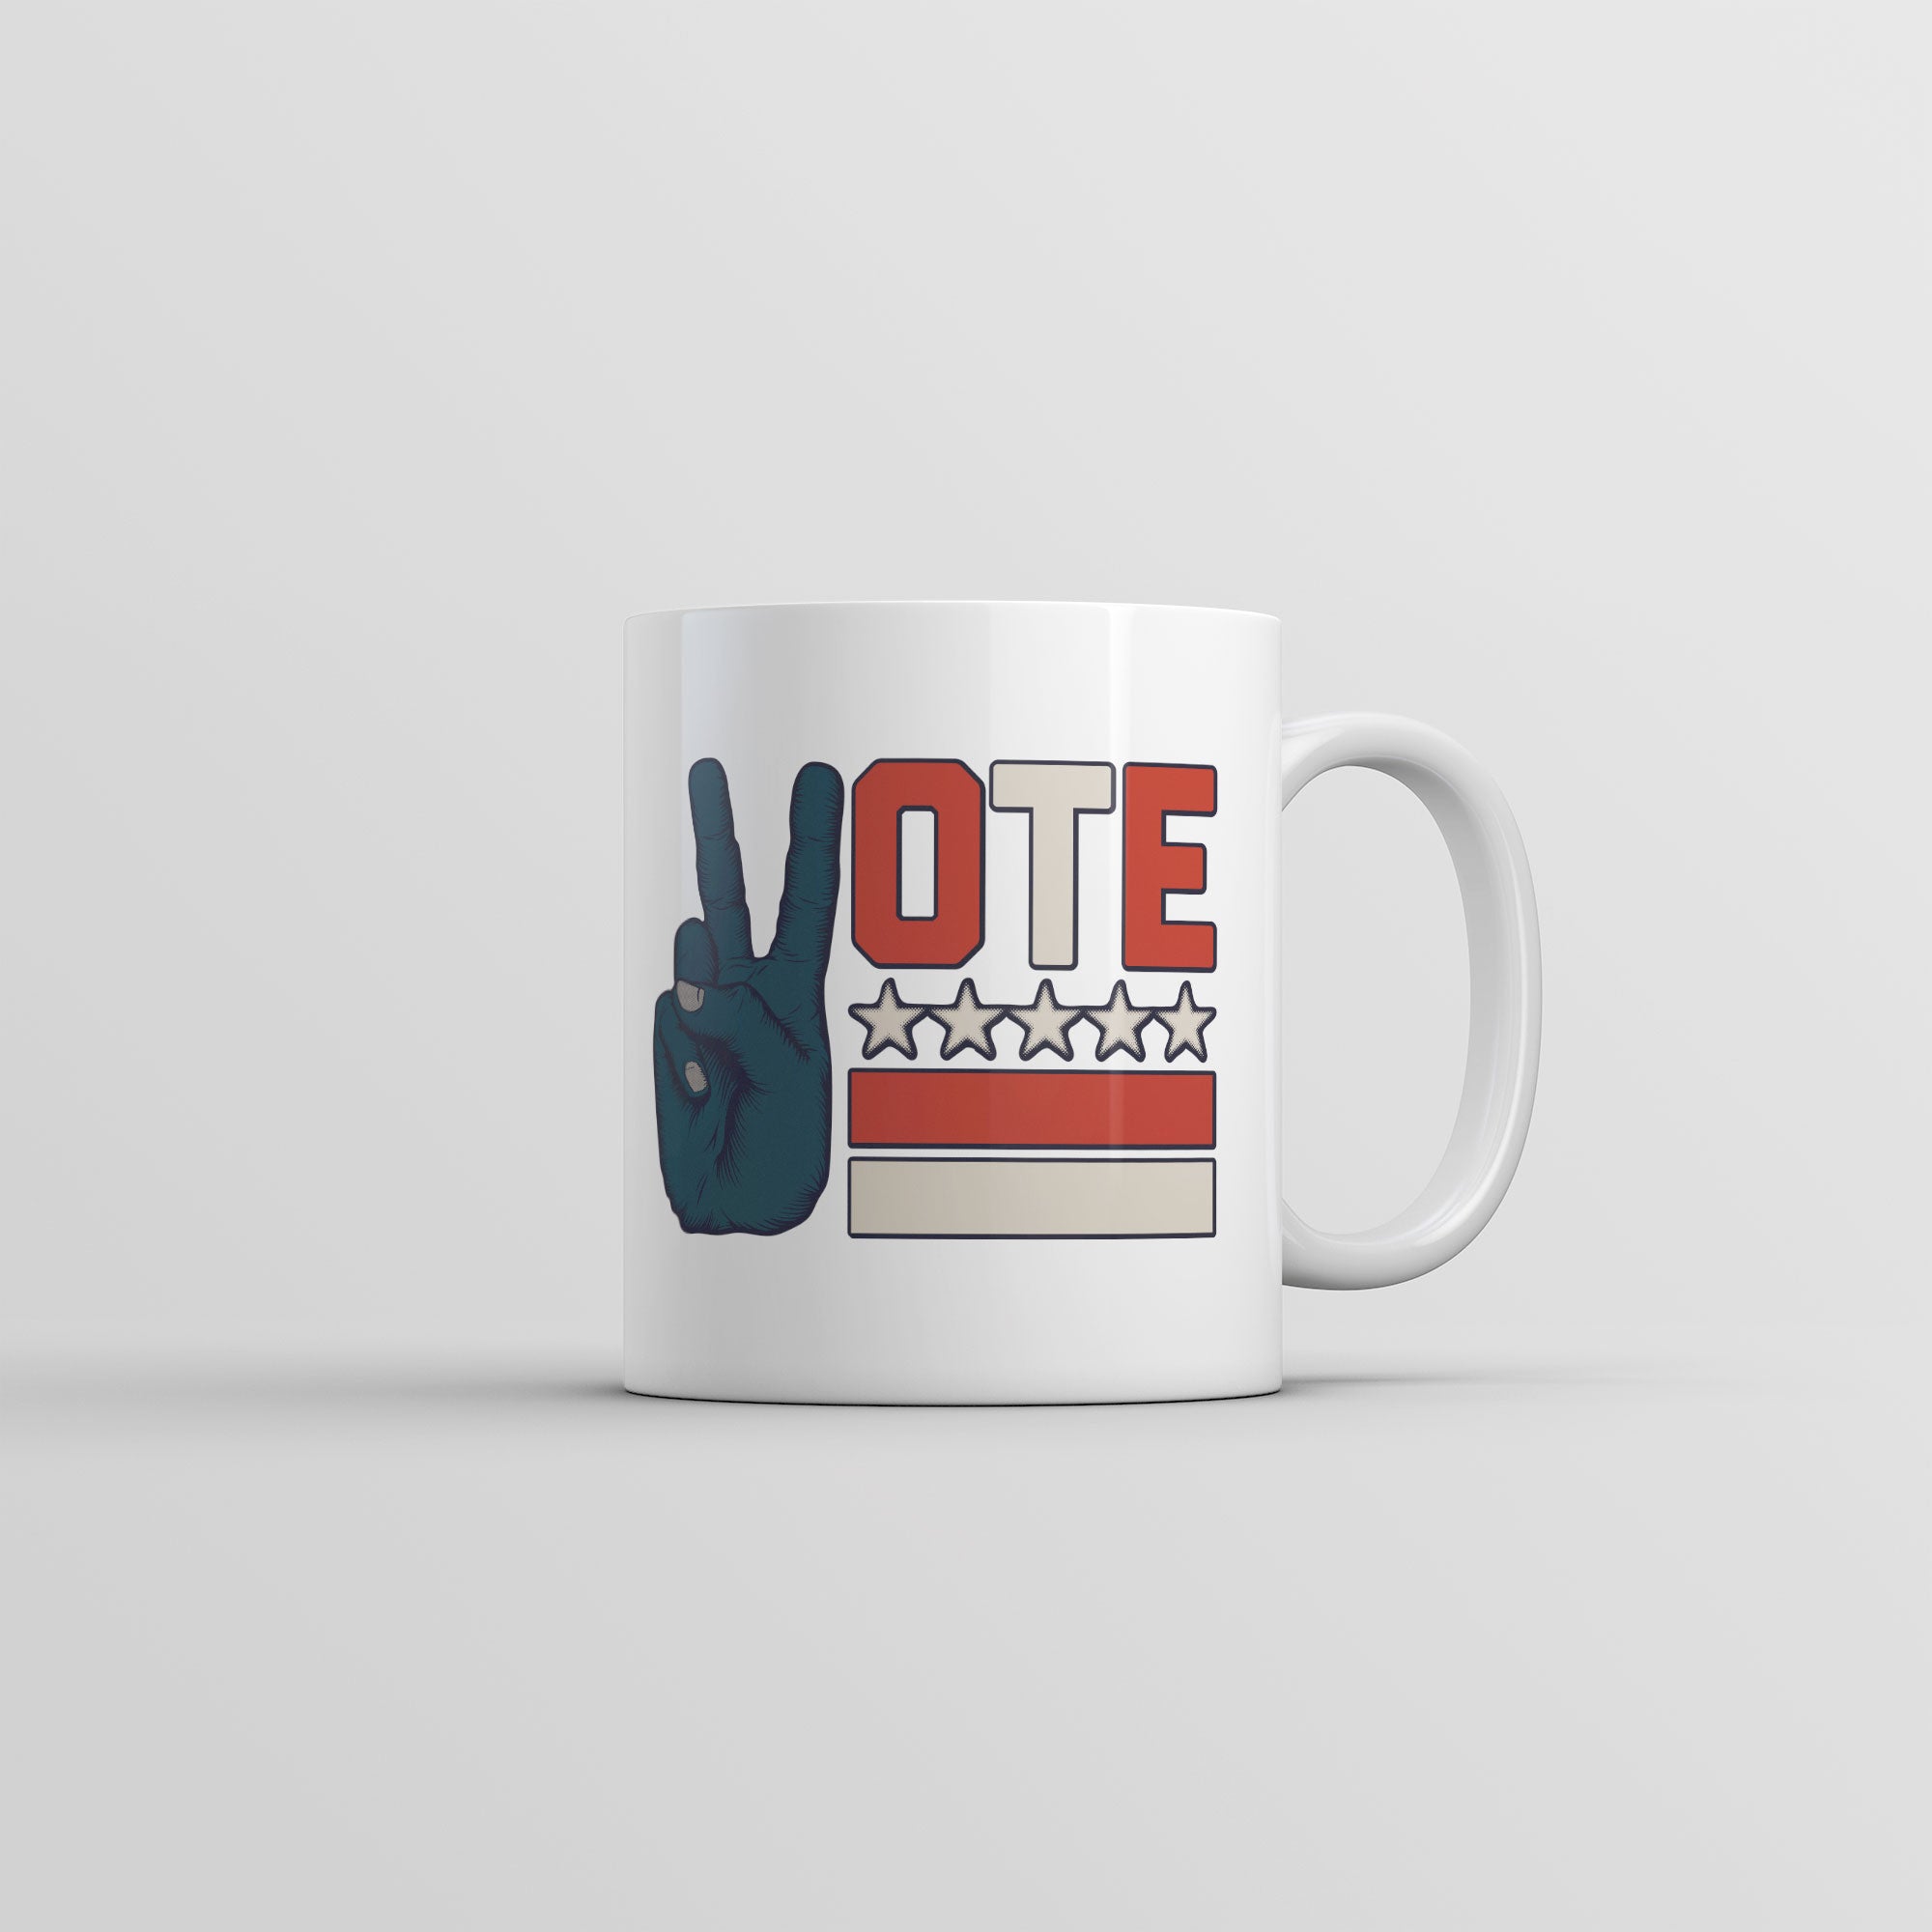 Funny White Vote Peace Hand Coffee Mug Nerdy Political Tee